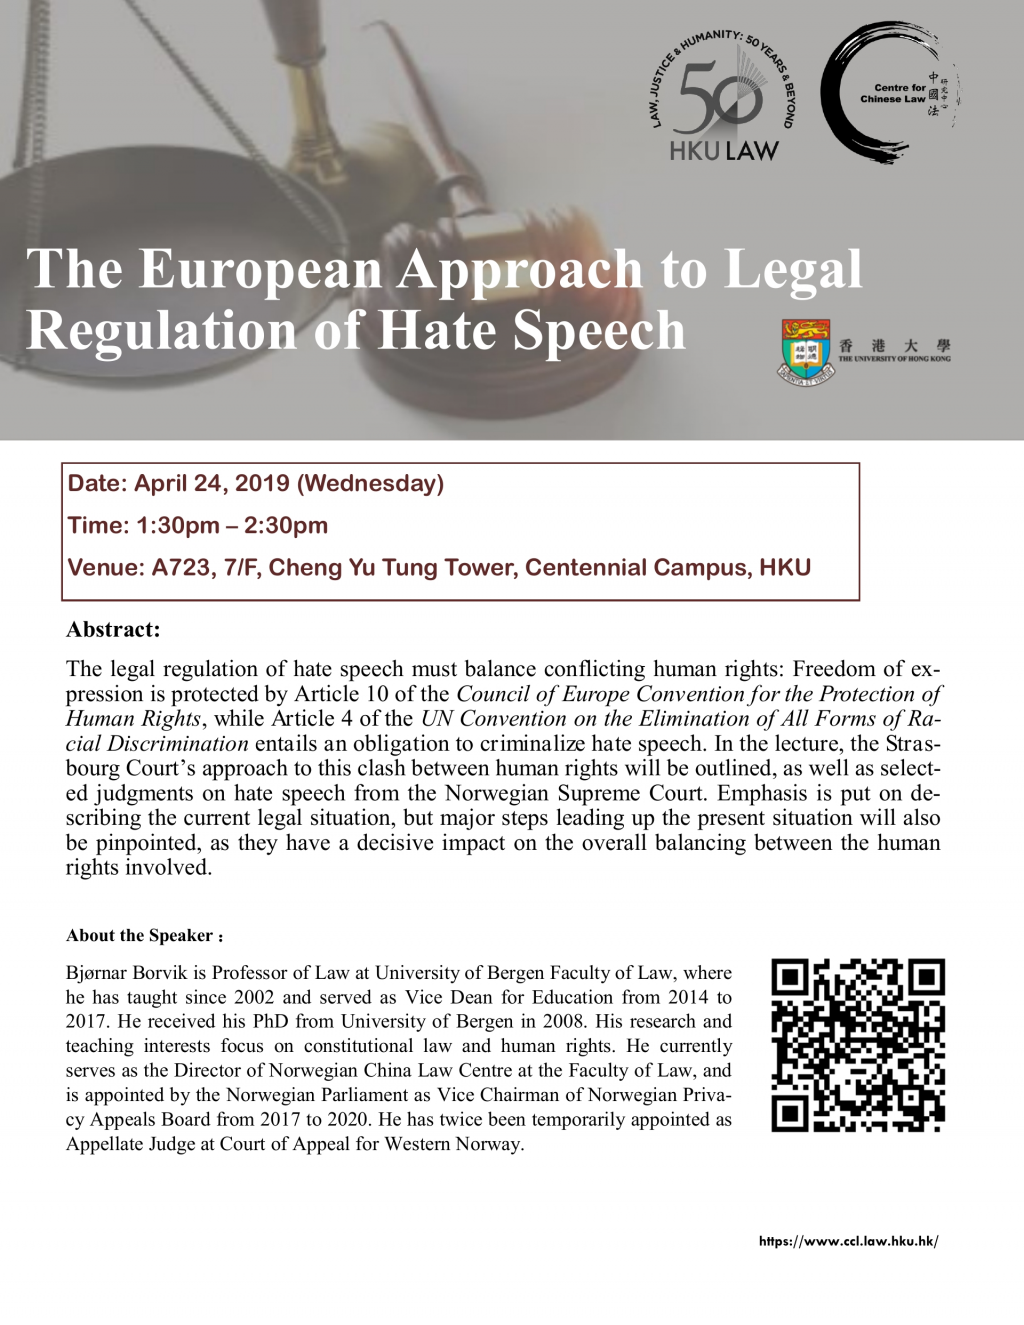 The European Approach to Legal Regulation of Hate Speech